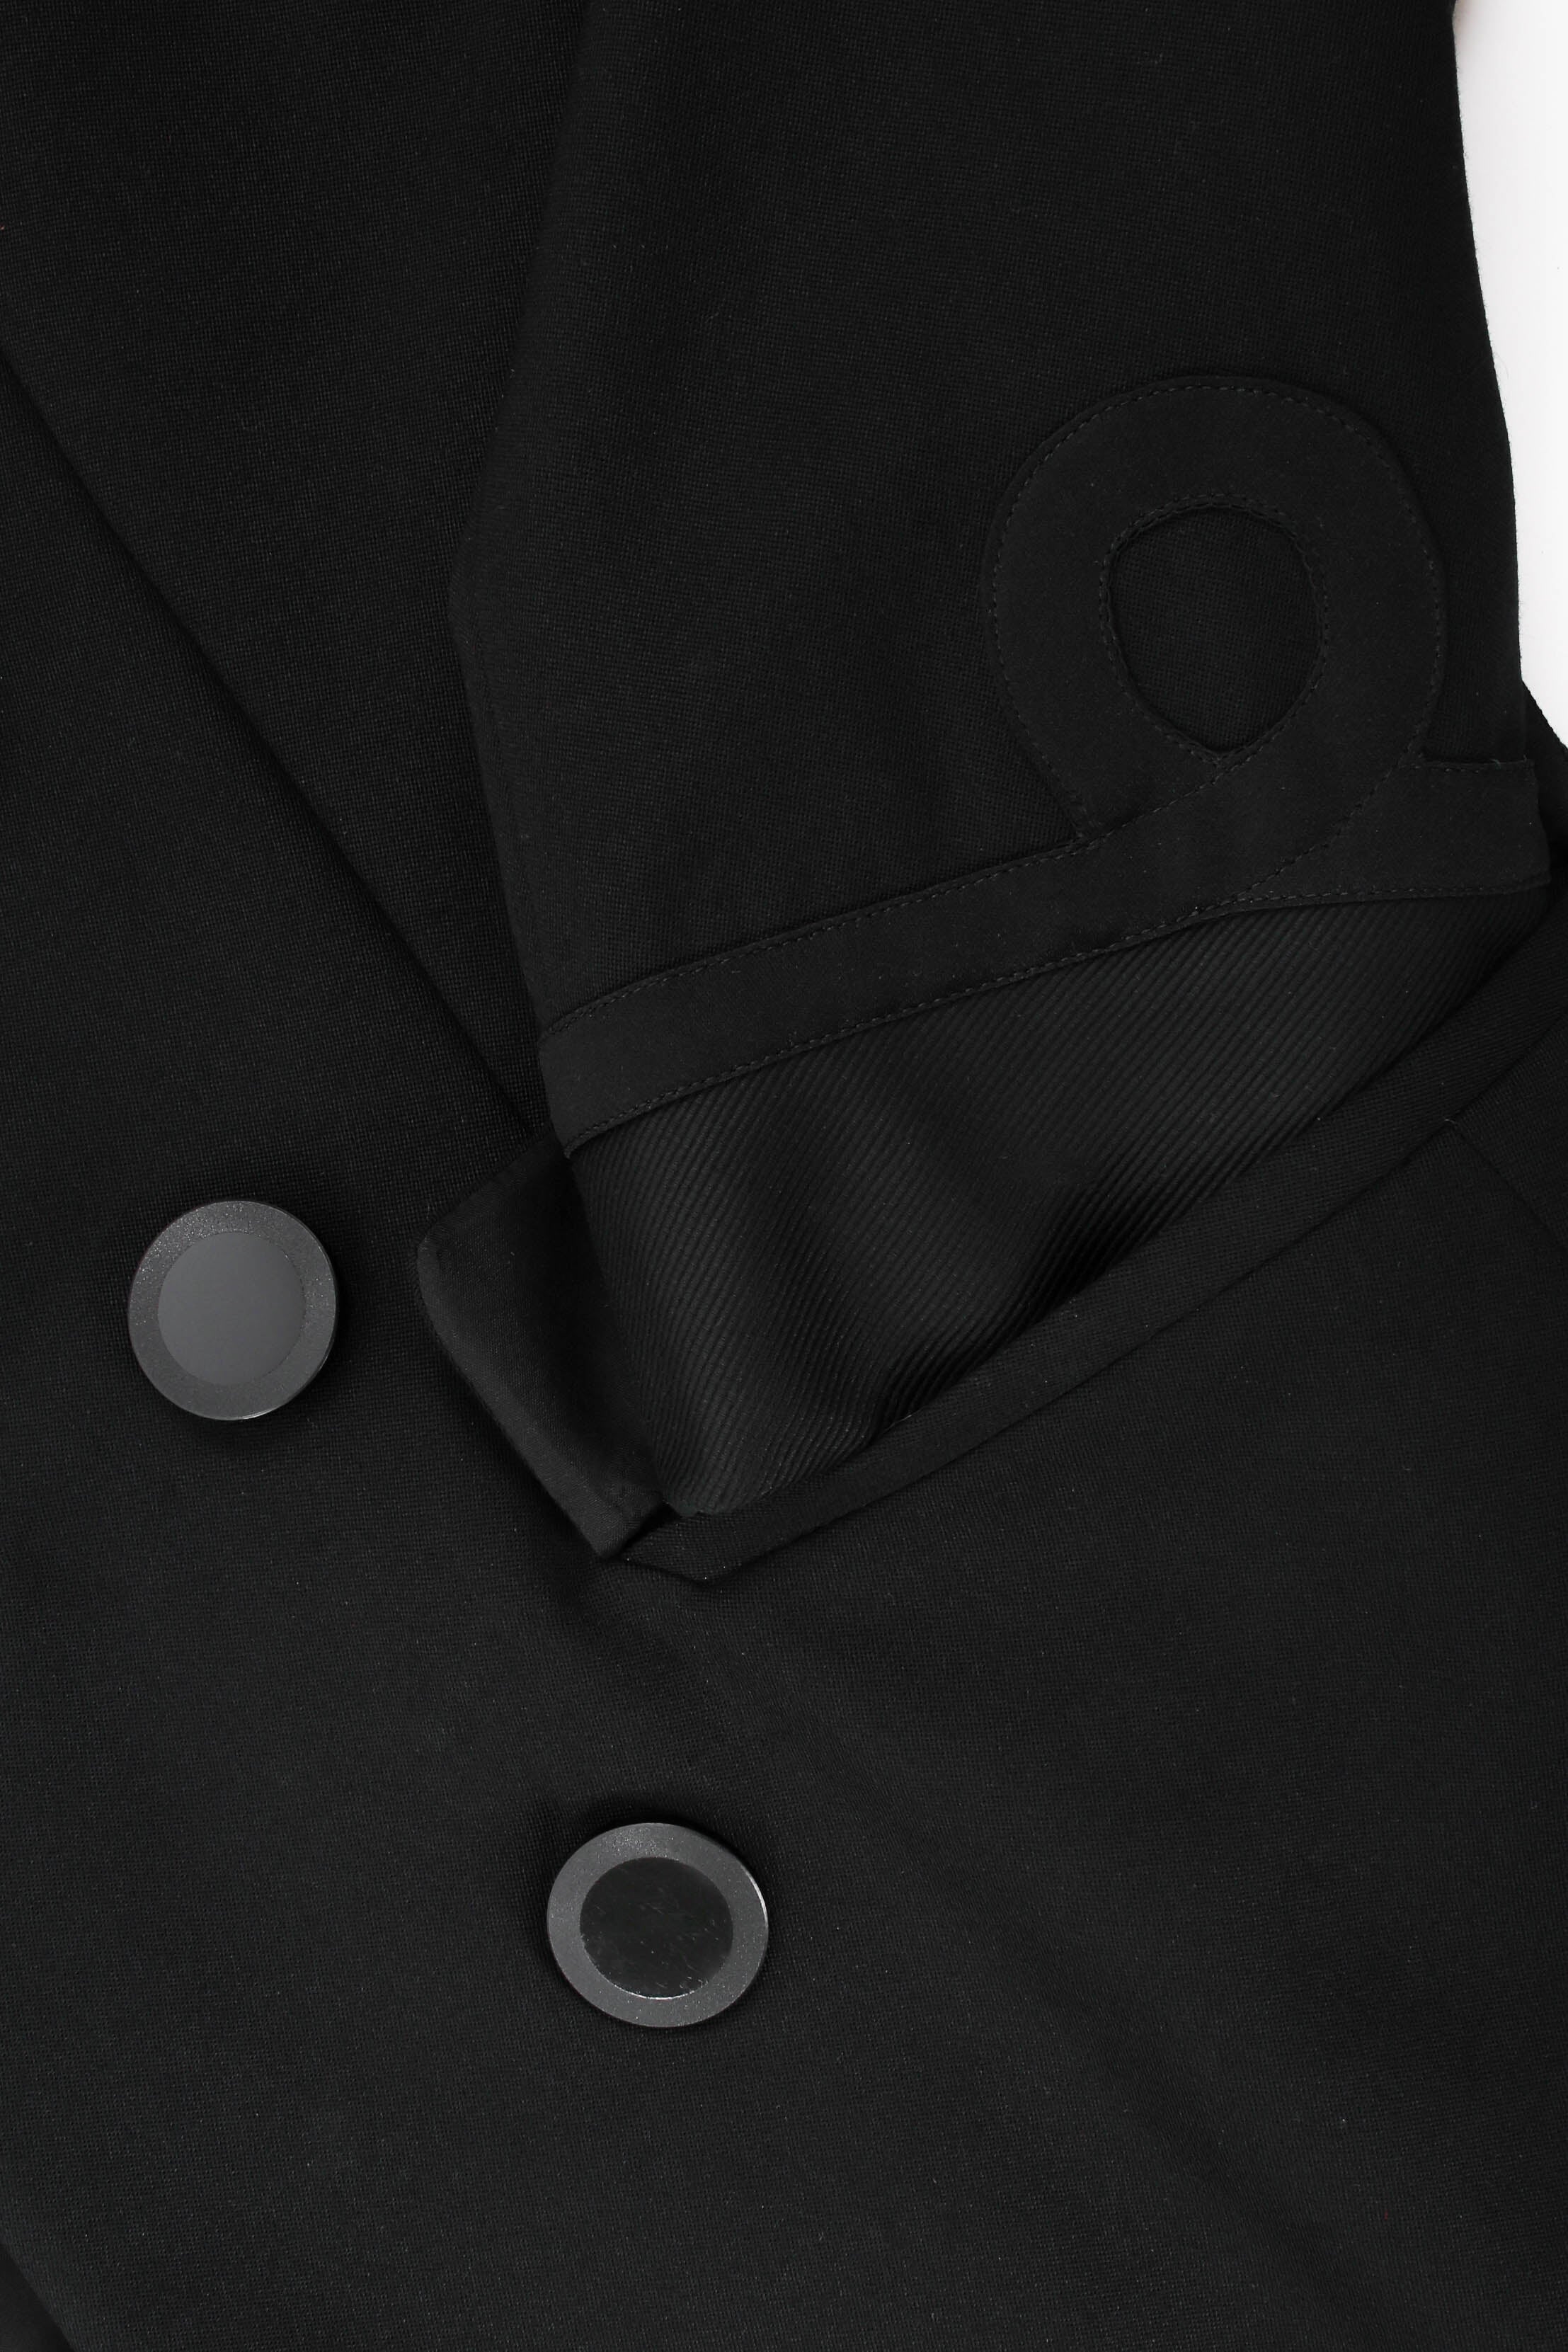 Vintage YSL Grosgrain Accented Tuxedo Jacket details at Recess Los Angeles